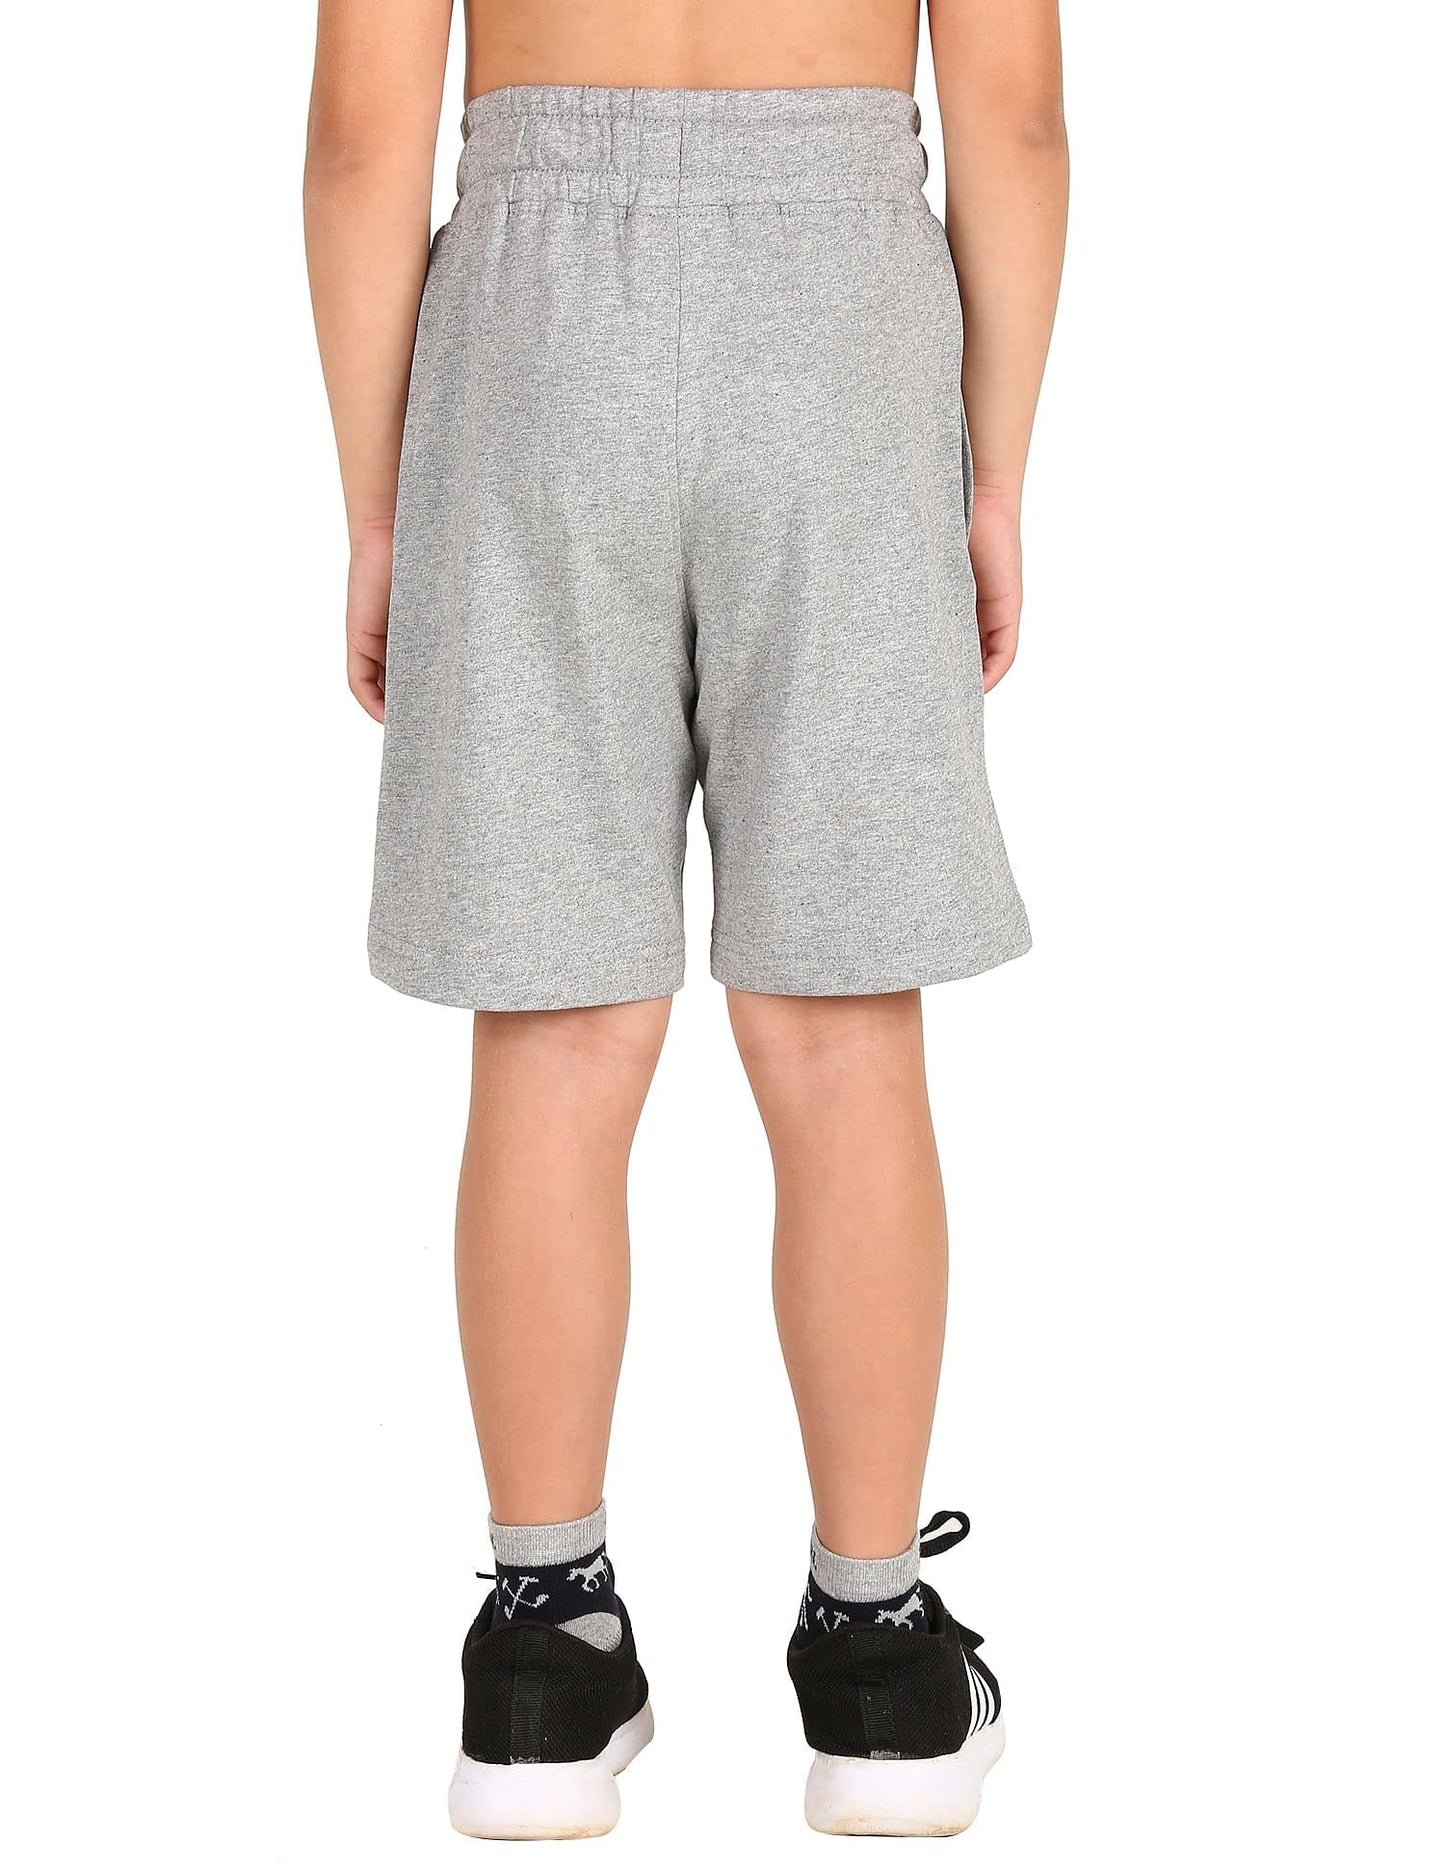 U.S. POLO ASSN. Boy's Cotton Heathered IKSA Shorts - Pack of 1 (GREY MELANGE L)